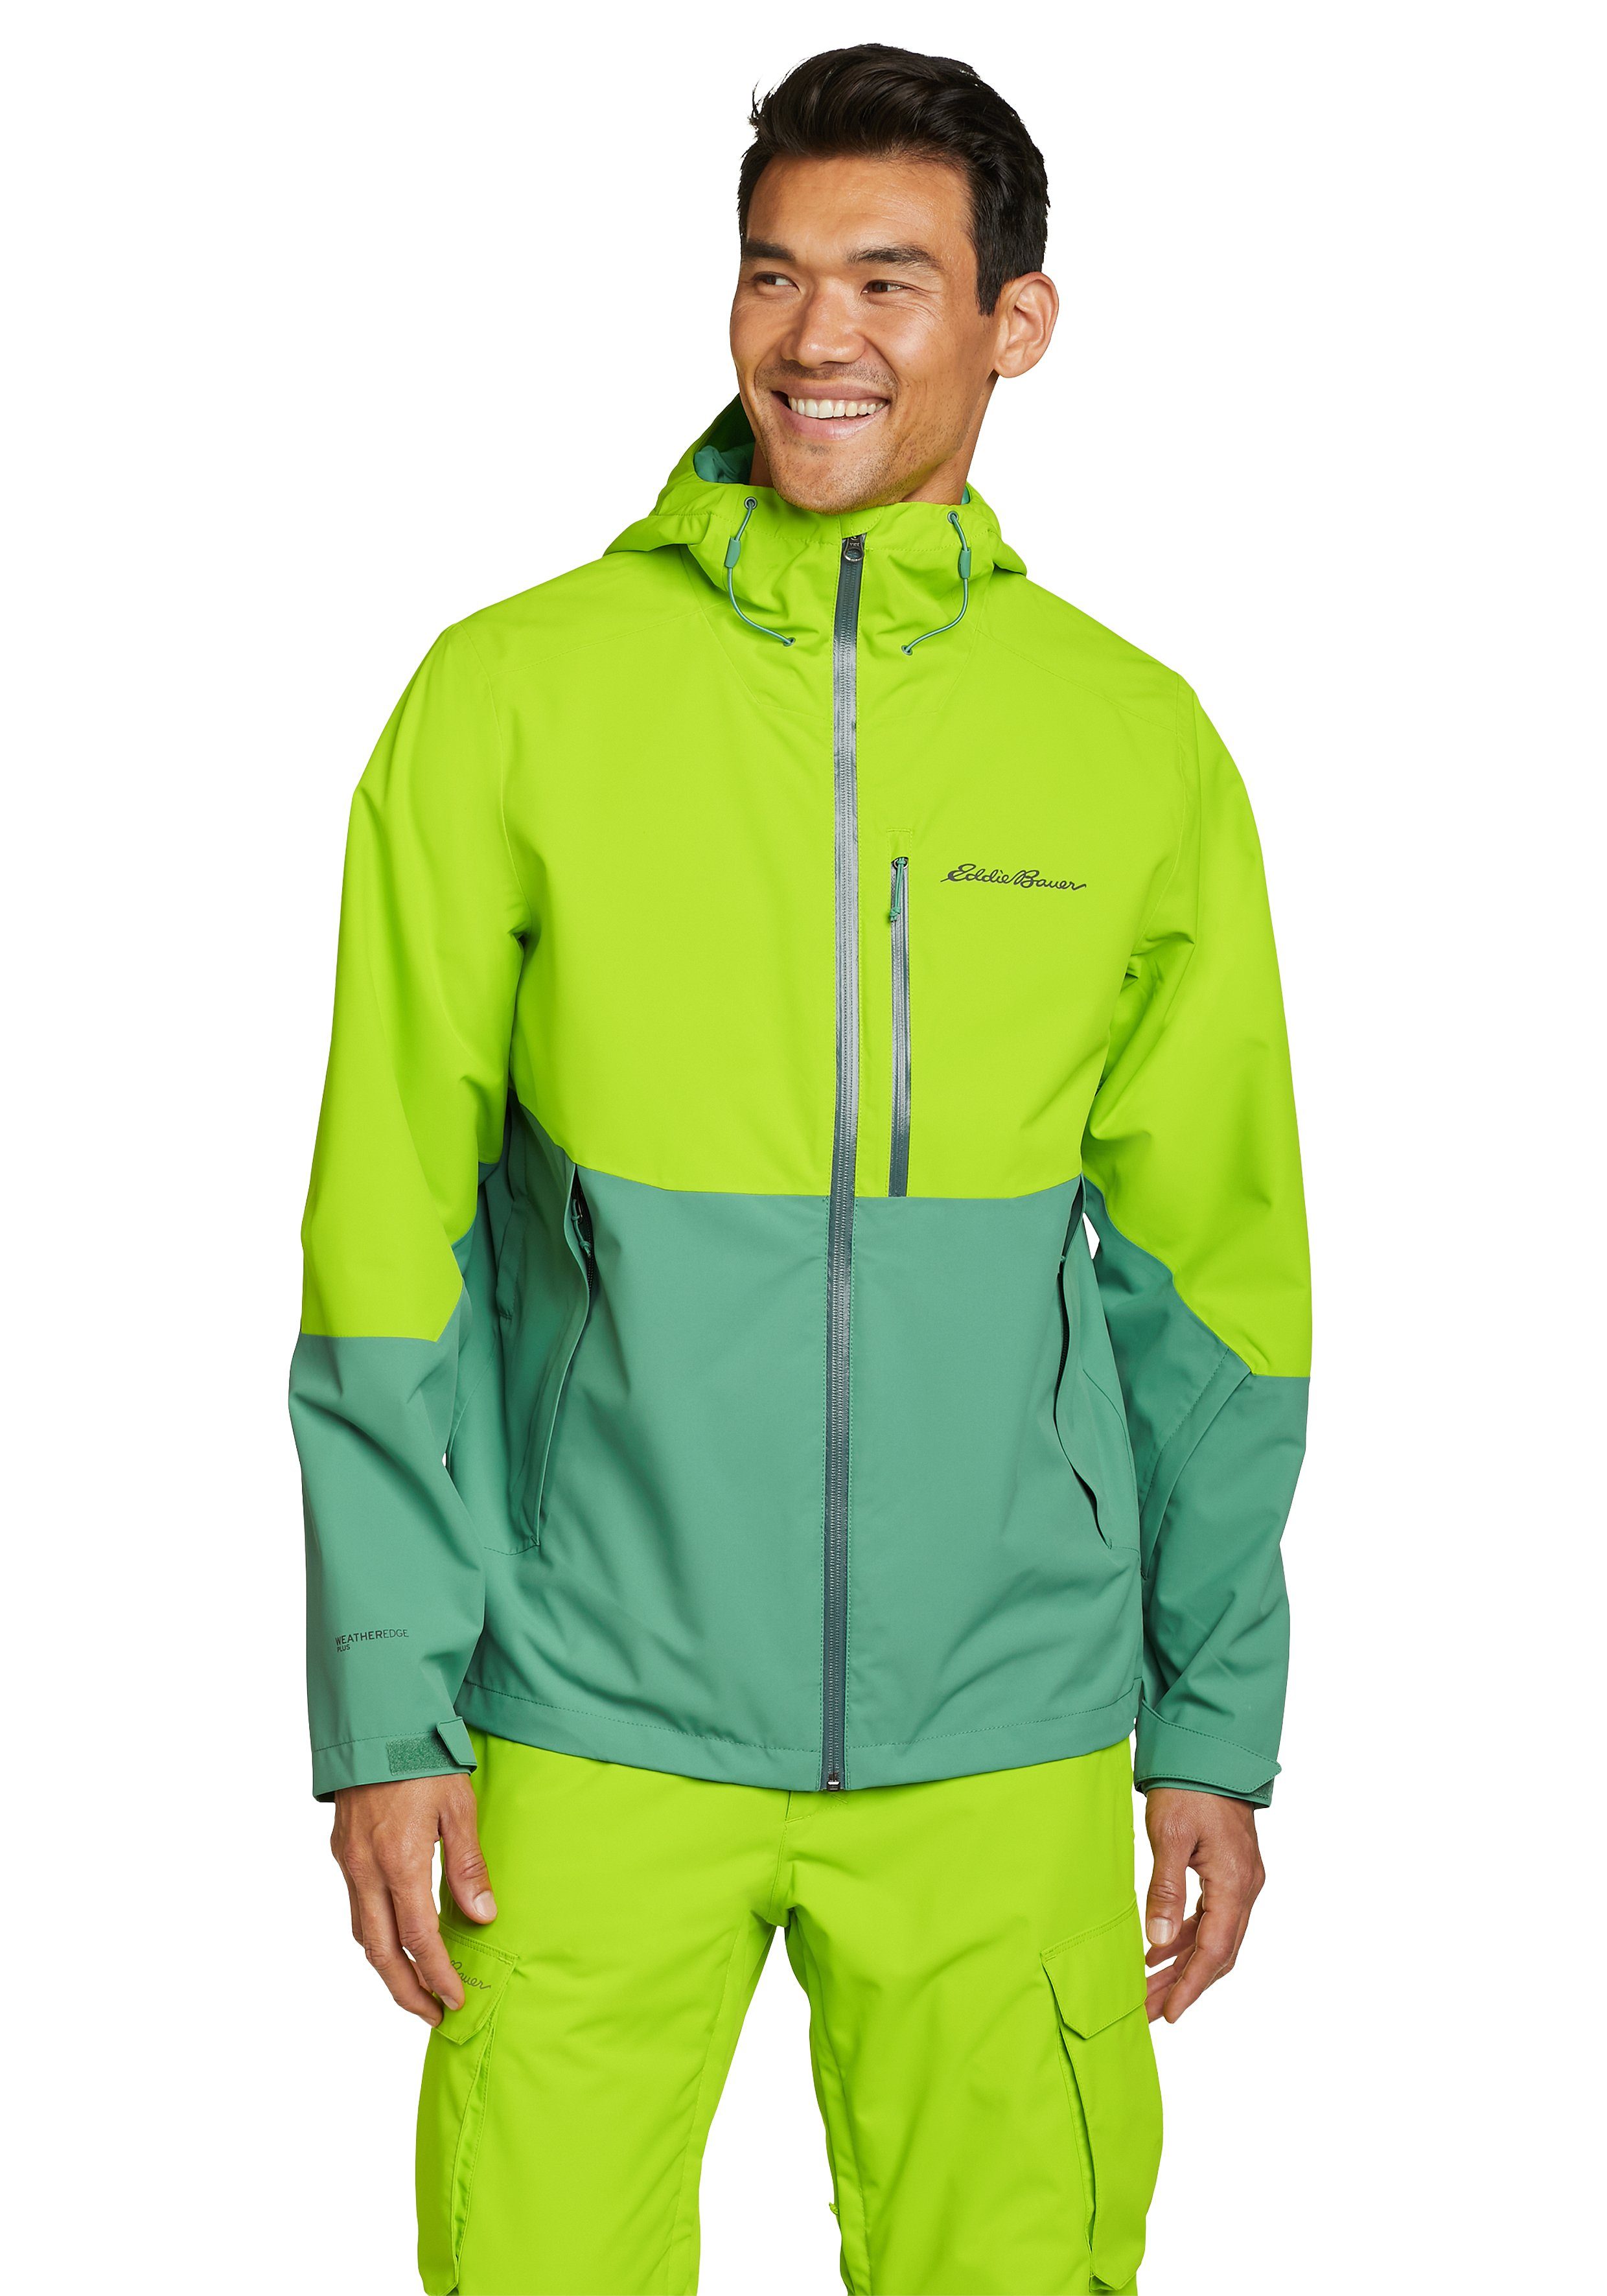 Eddie Bauer Skijacke Powder Search Jacke mit Kapuze Frühlingsgrün